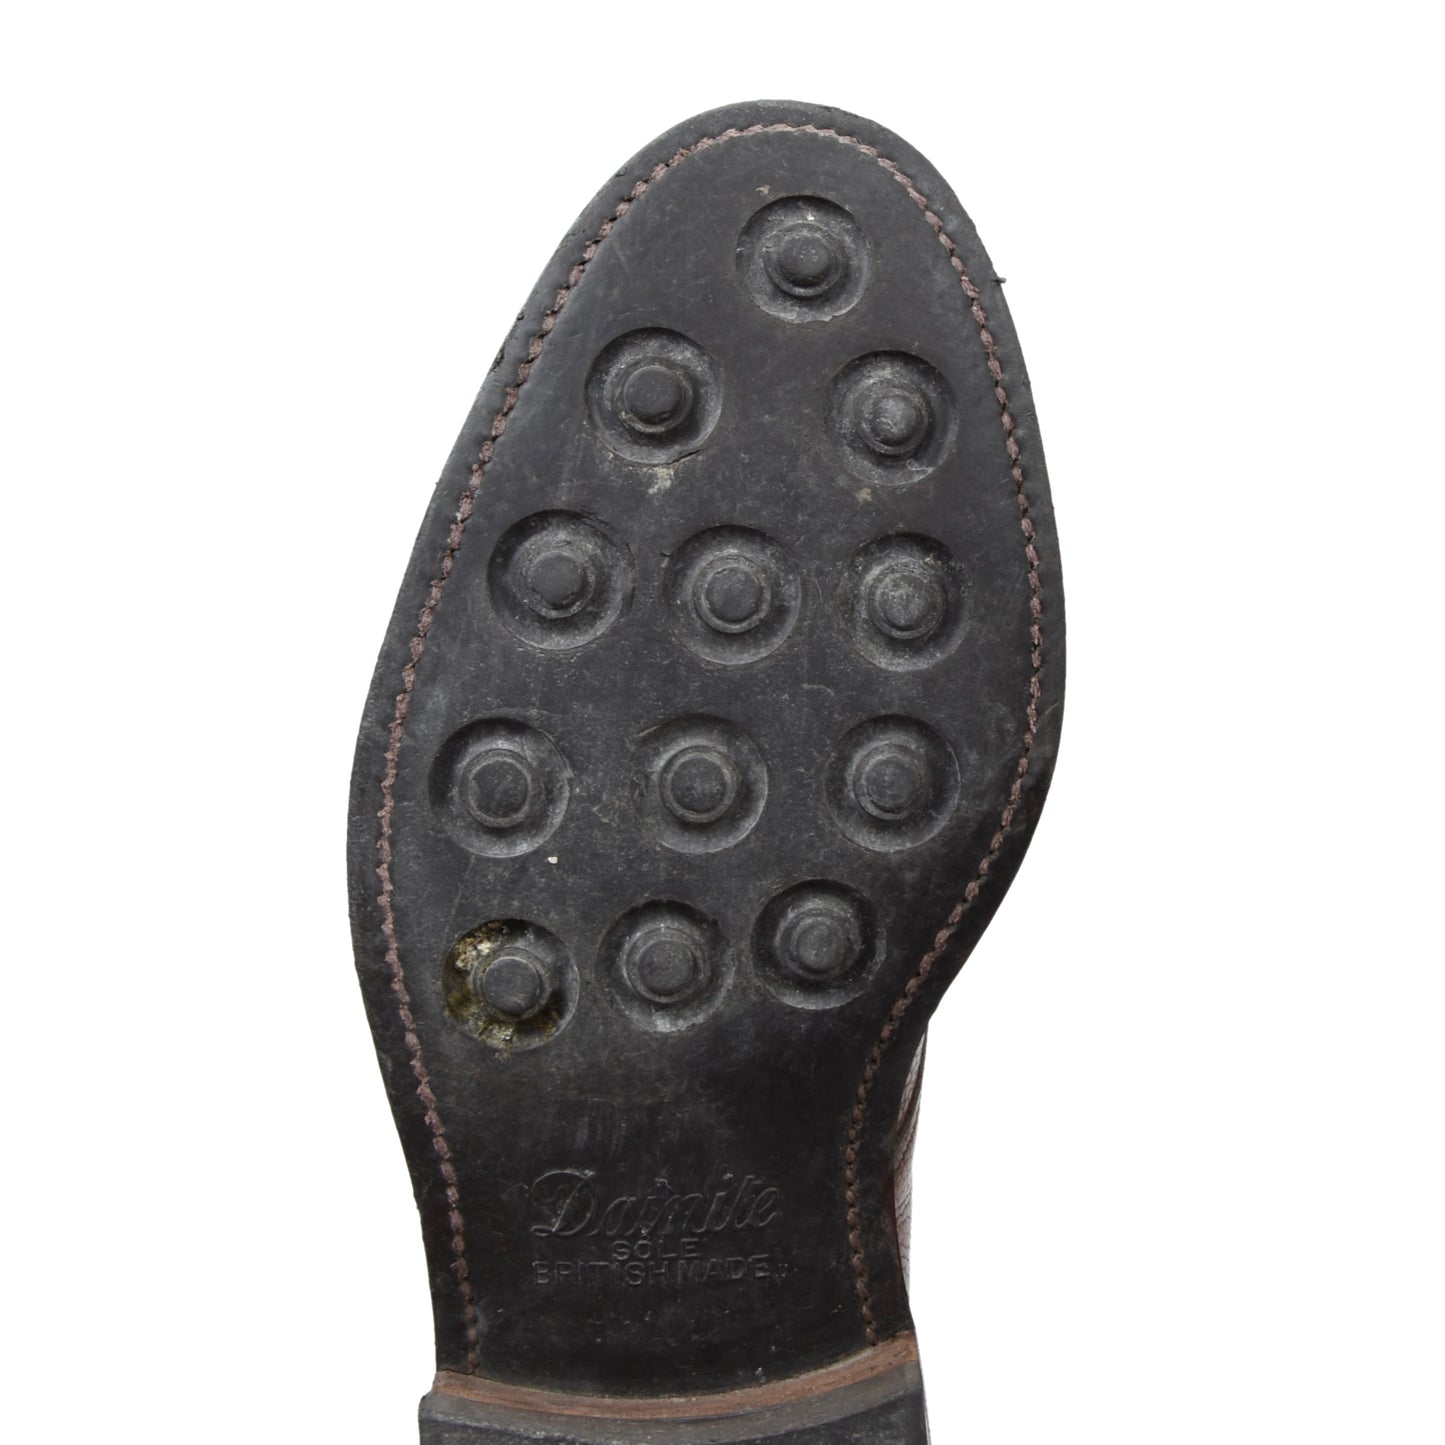 Crockett & Jones for House of Gentlemen Coniston Boots Size 8E - Brown